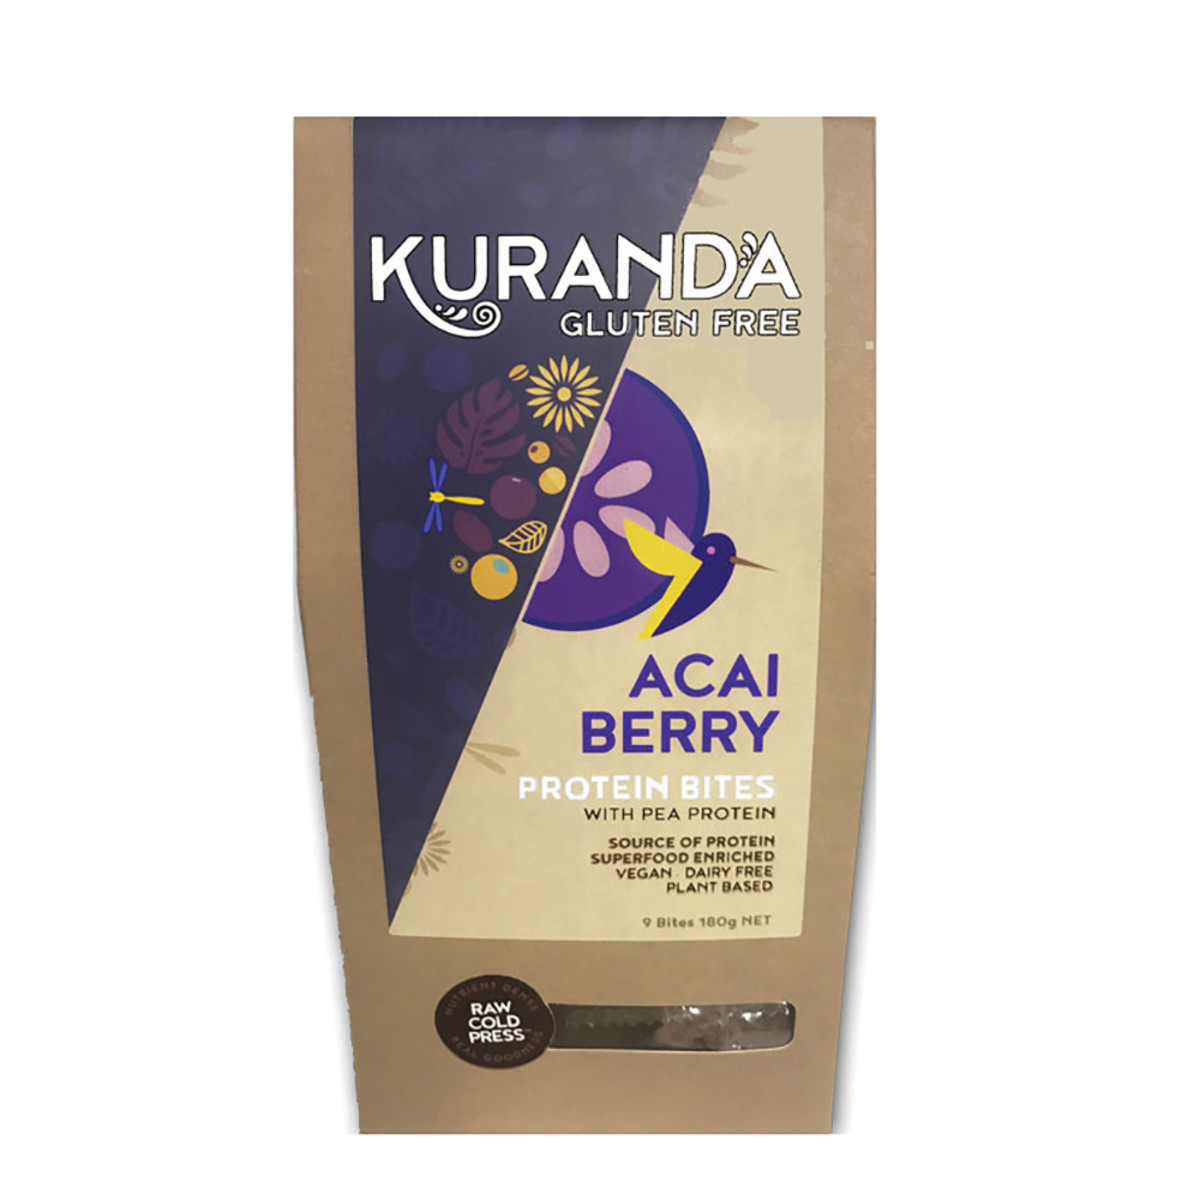 KURANDA - Gluten Free Protein Bites Acai Berry 20g